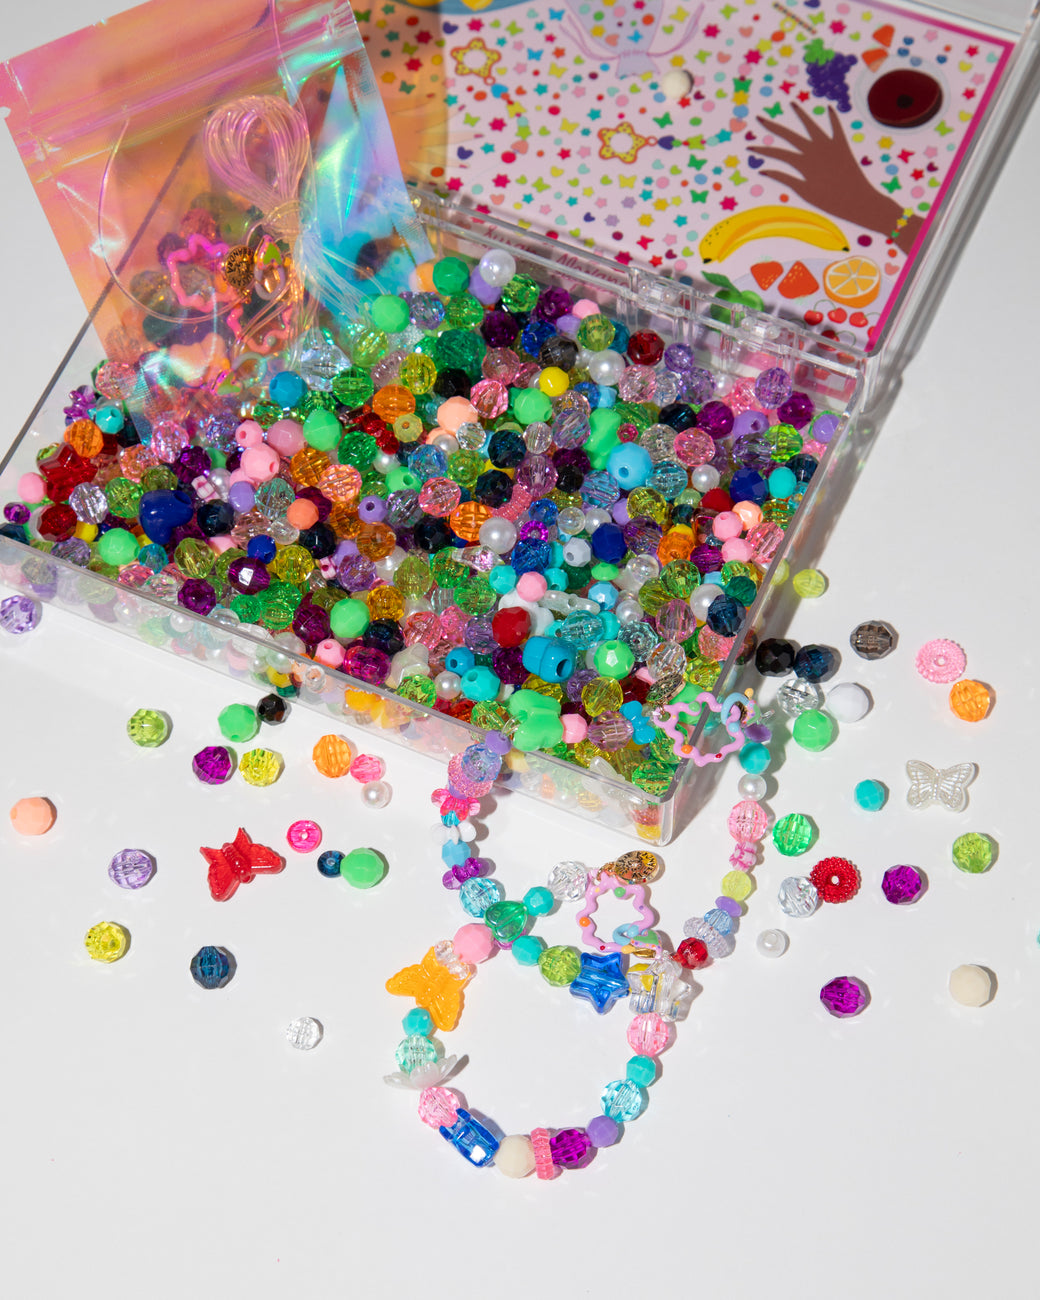 Susan Alexandra DIY Bead Box review: Is this celeb-favorite bead